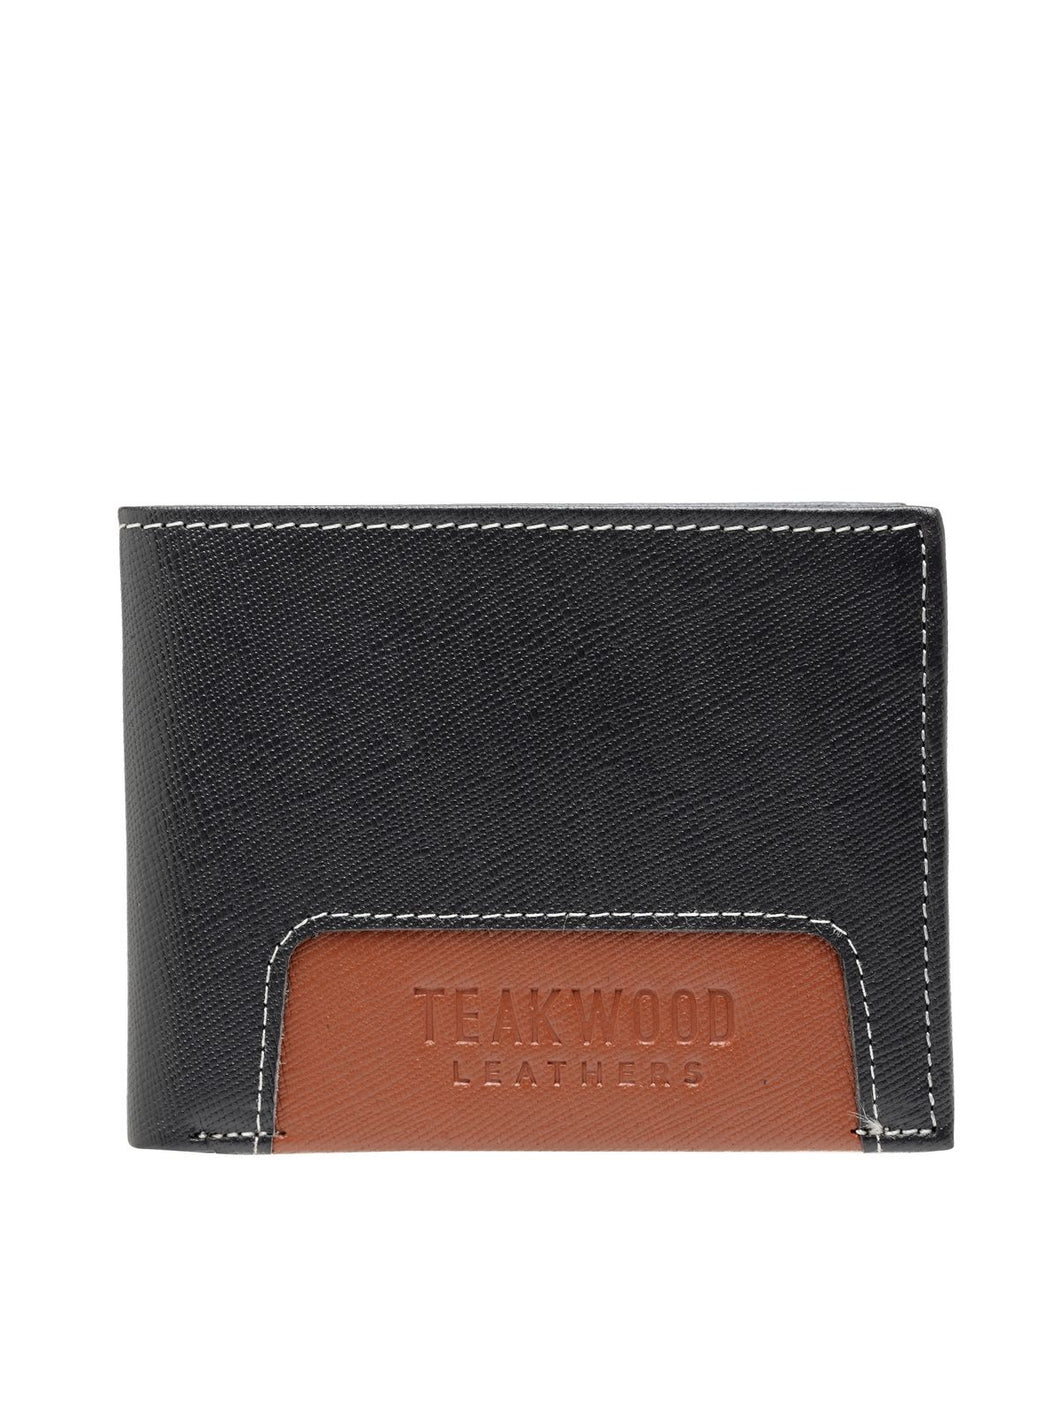 Teakwood Leathers Men Black Solid Two Fold Leather Wallet